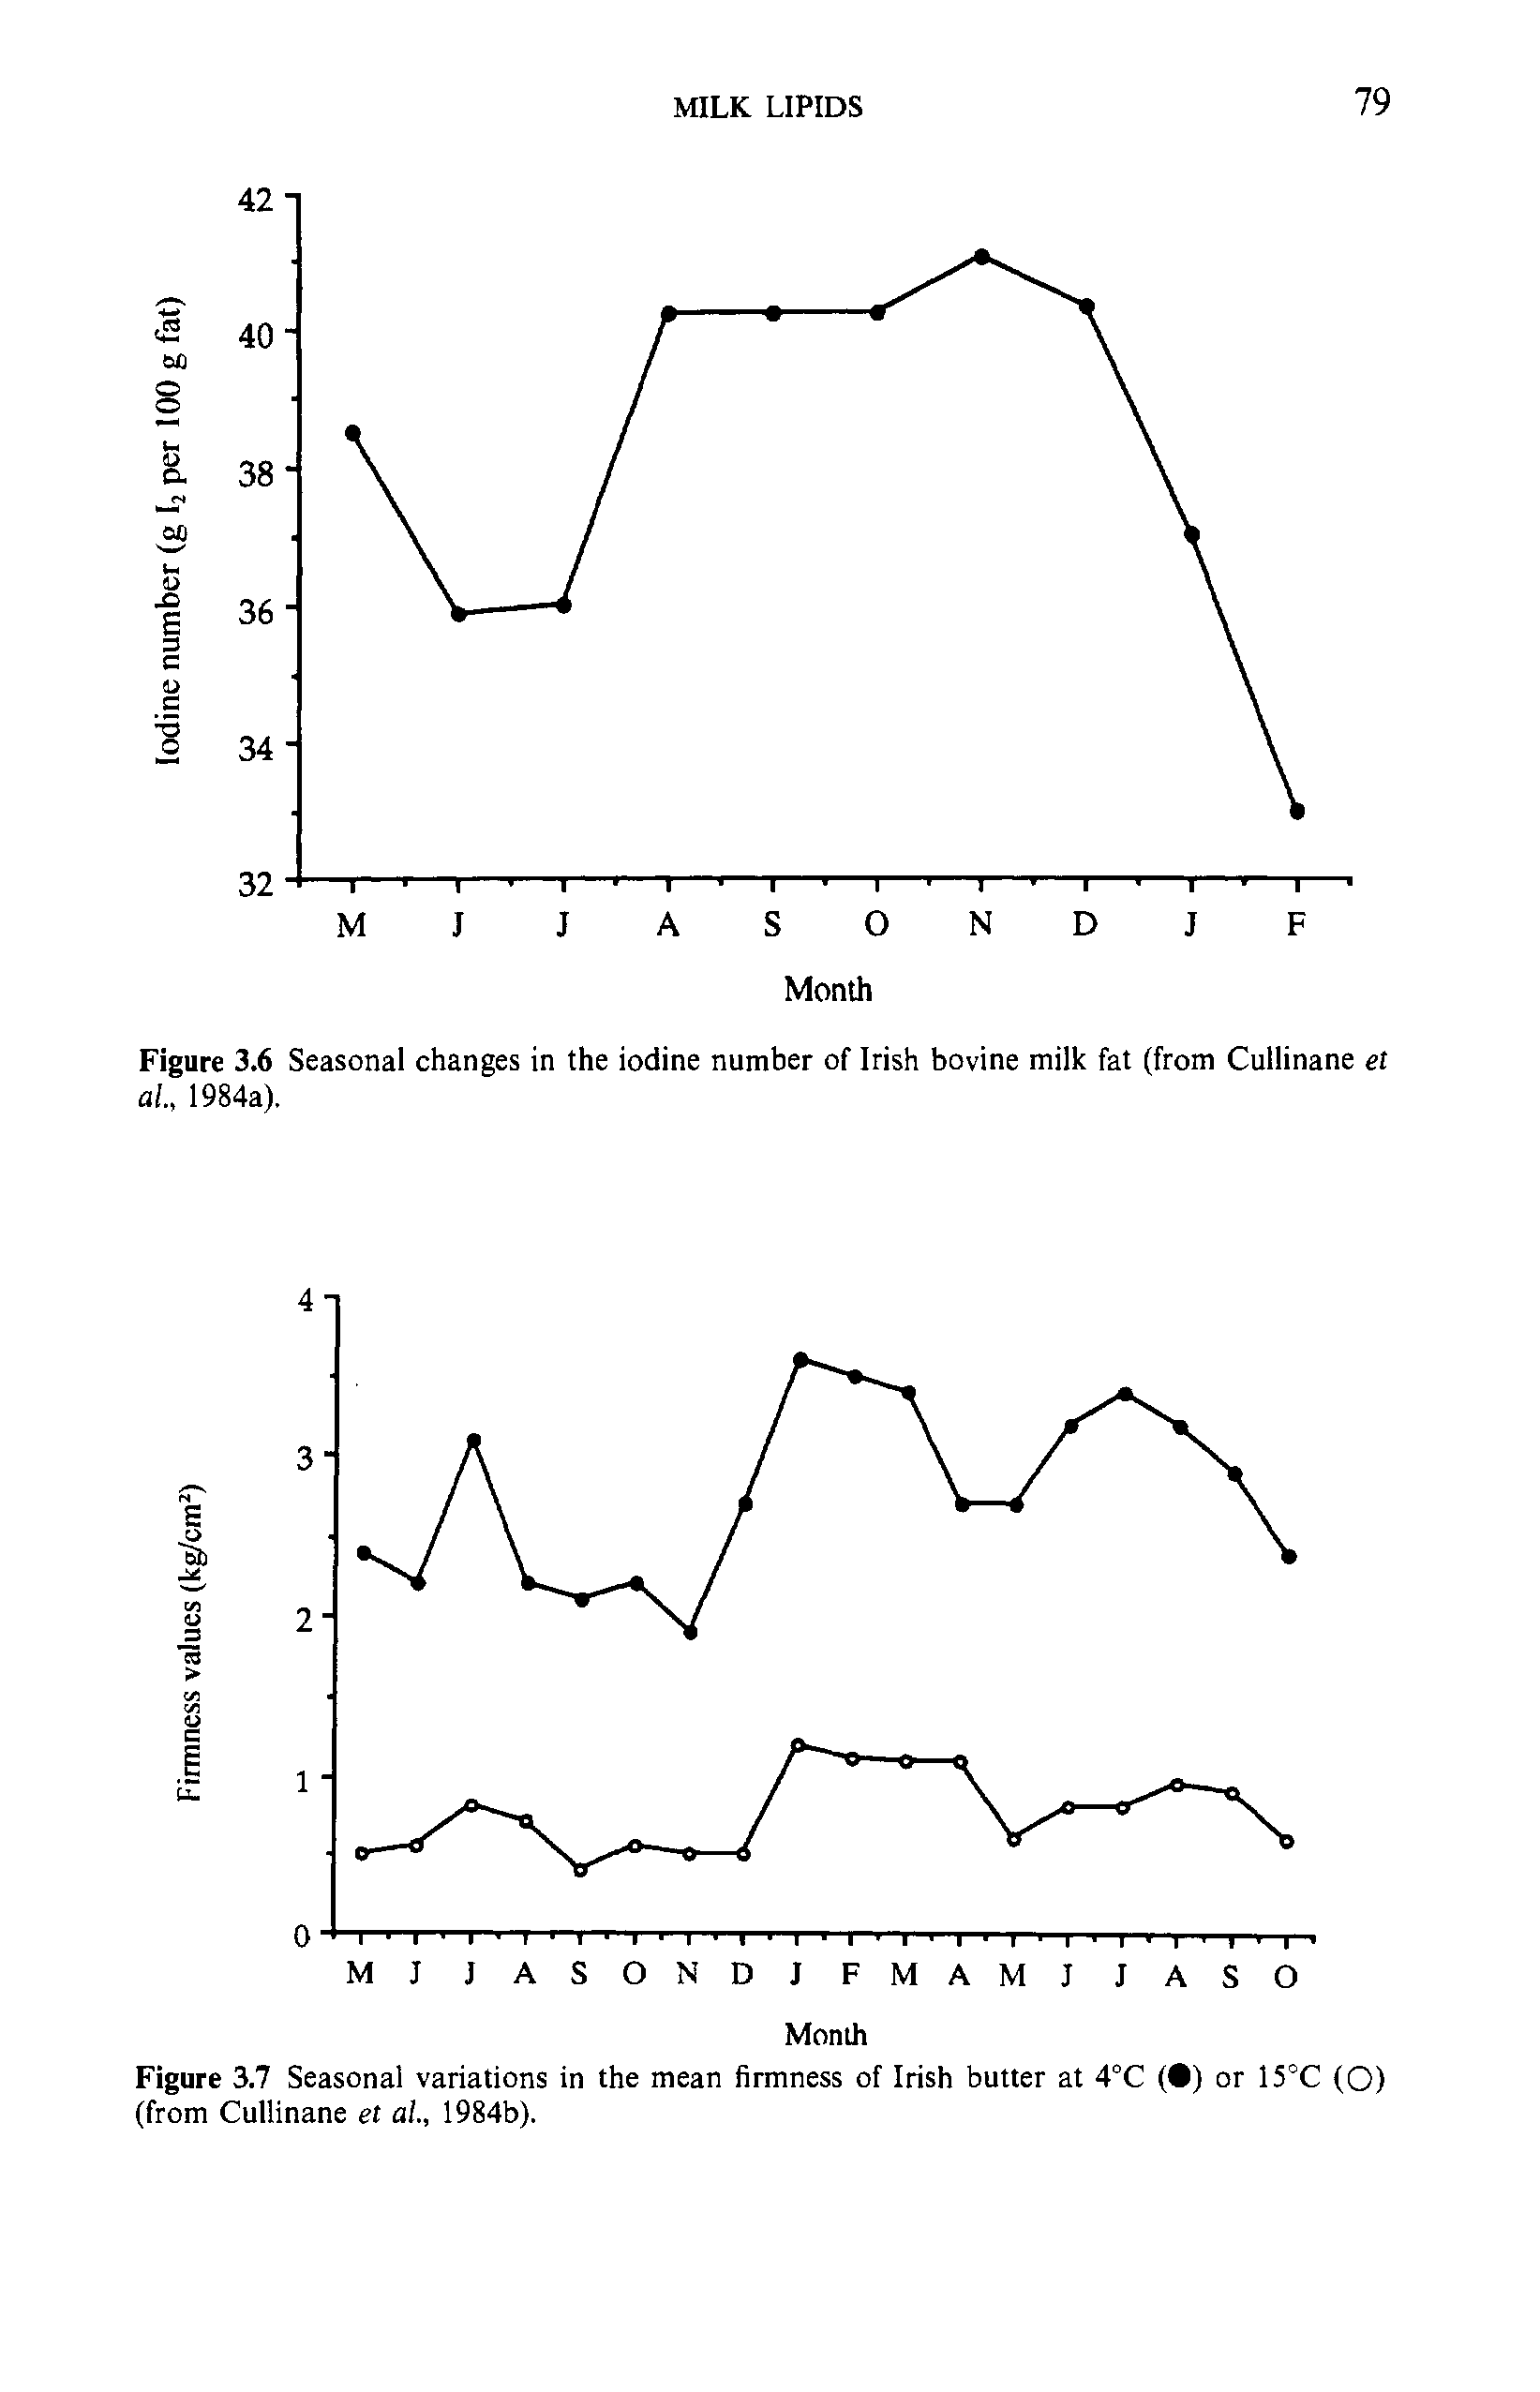 Figure 3.6 Seasonal changes in the iodine number of Irish bovine milk fat (from Cullinane et al., 1984a).